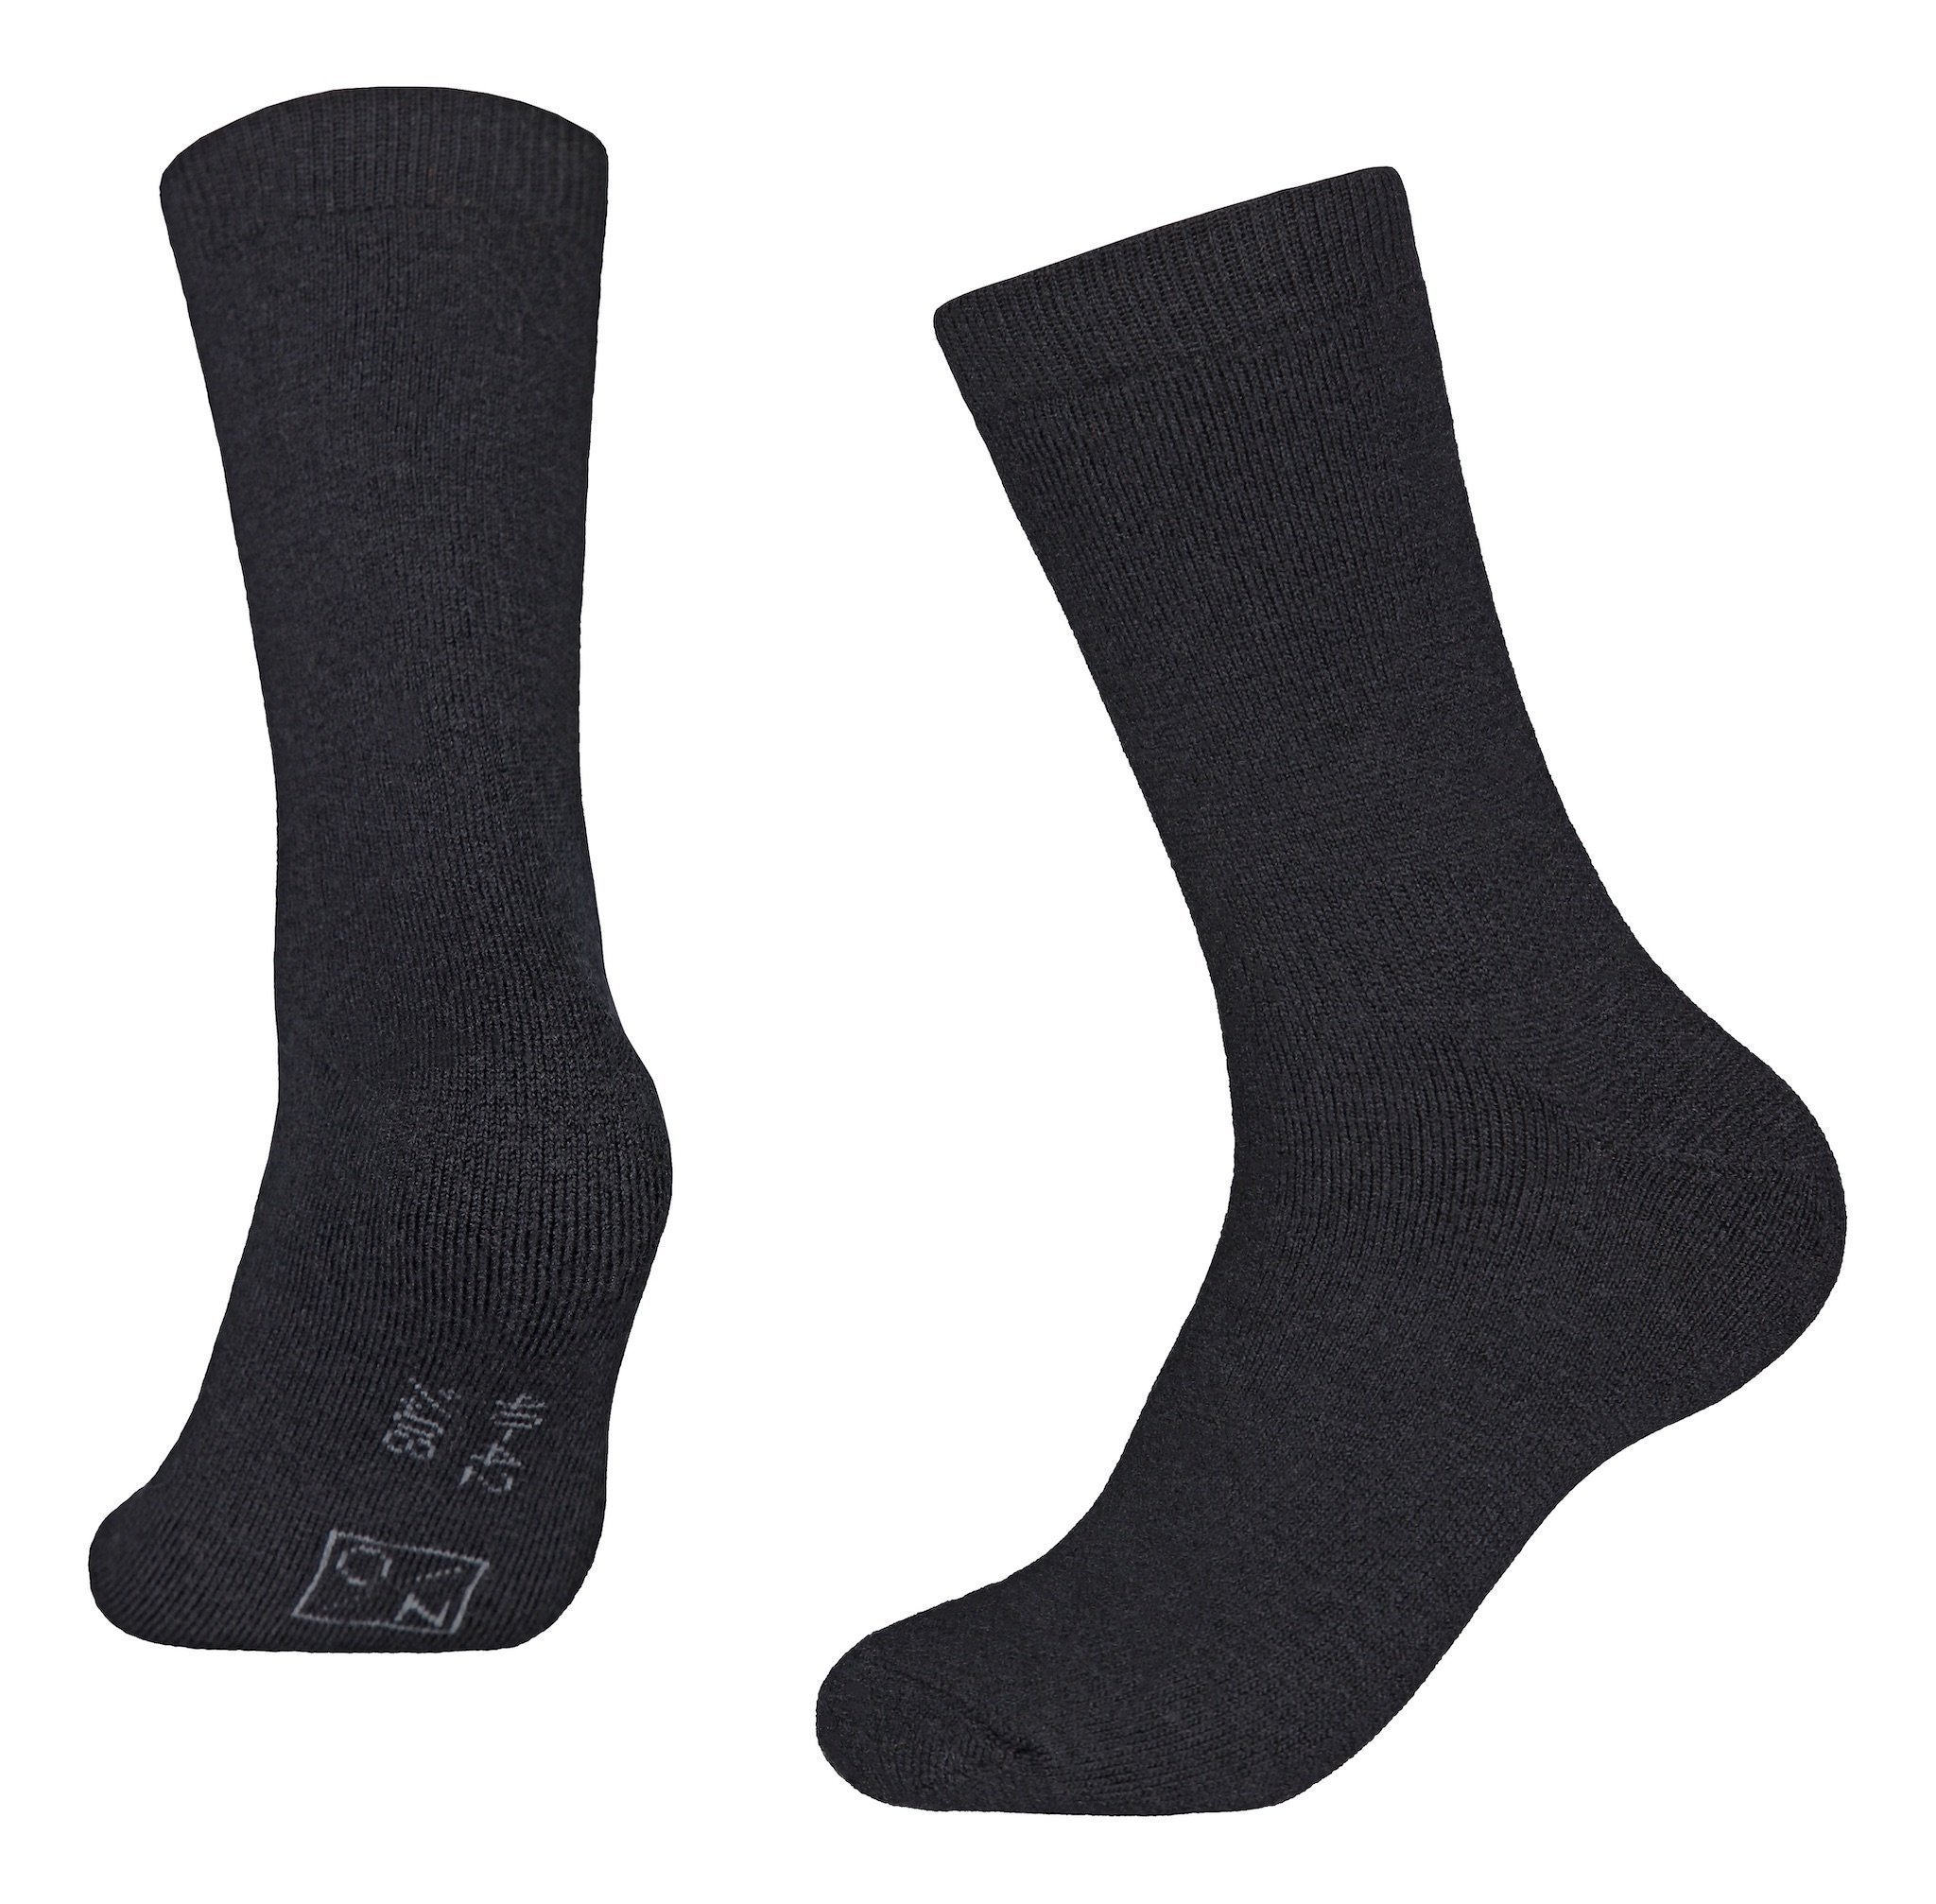 North Outdoor Merino Wool Socks - Merino 80, Black / 45-47